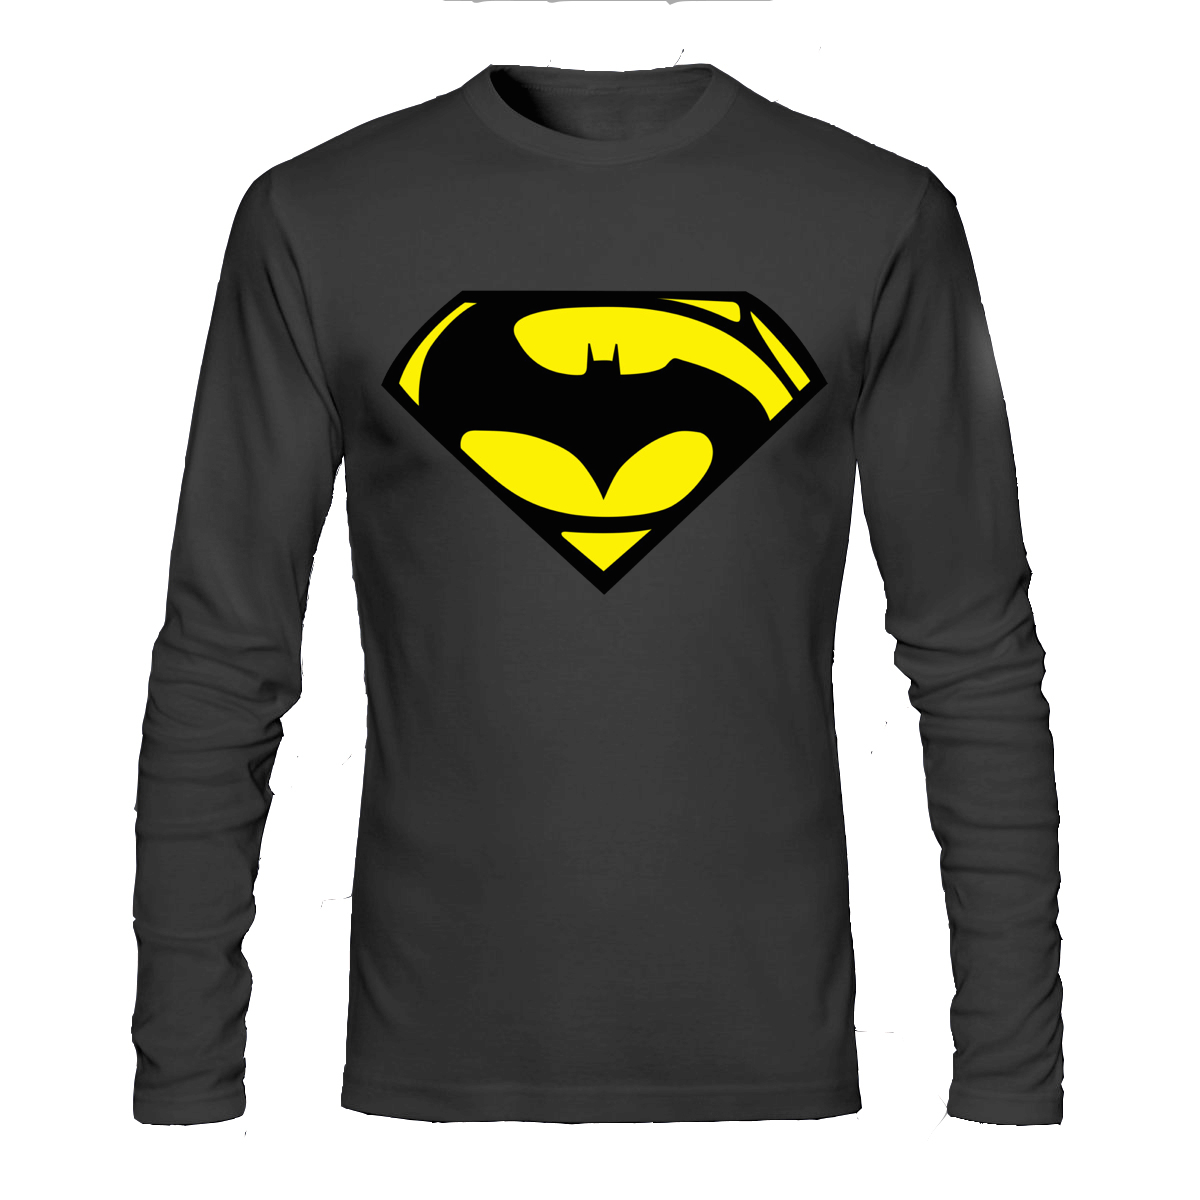 Batman Vs Superman T-Shirts & Hoodies Archives - Swag Shirts